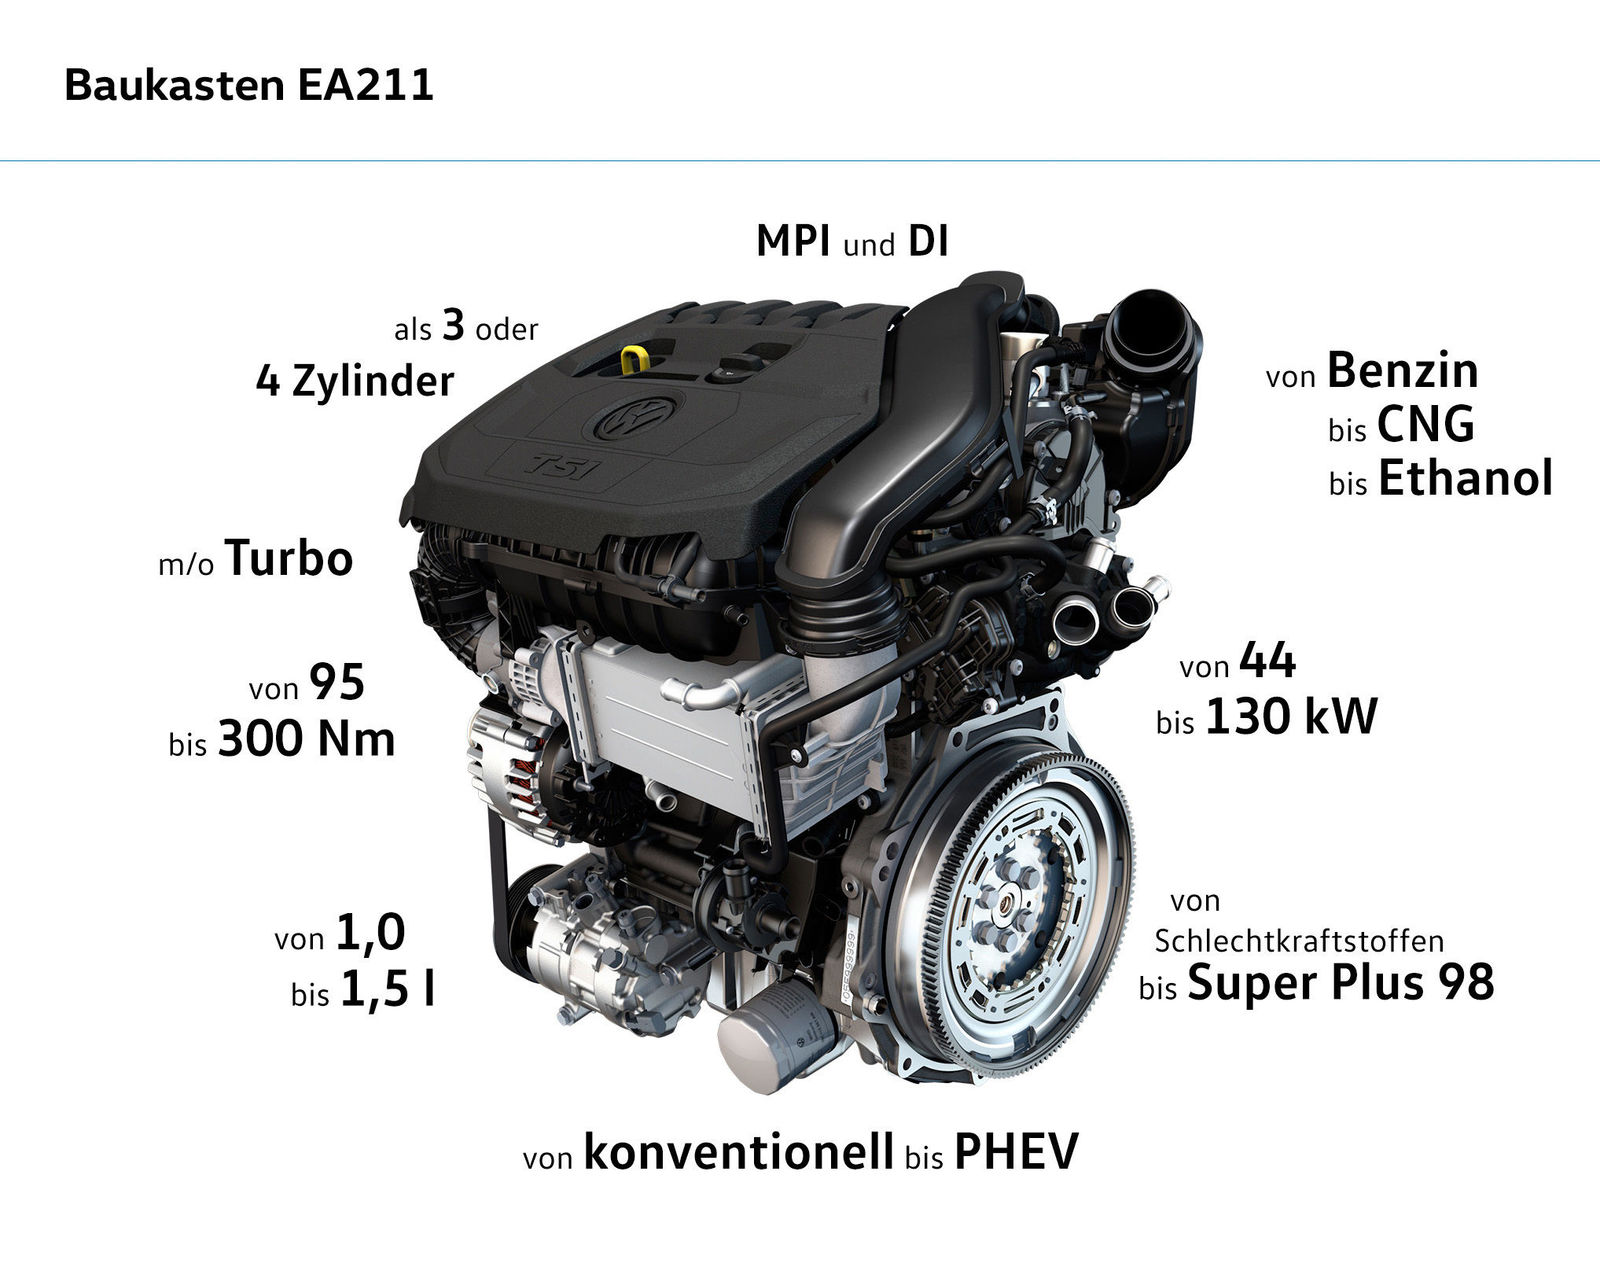 1.5 TSI evo Motor mit 96 kW / 130 PS